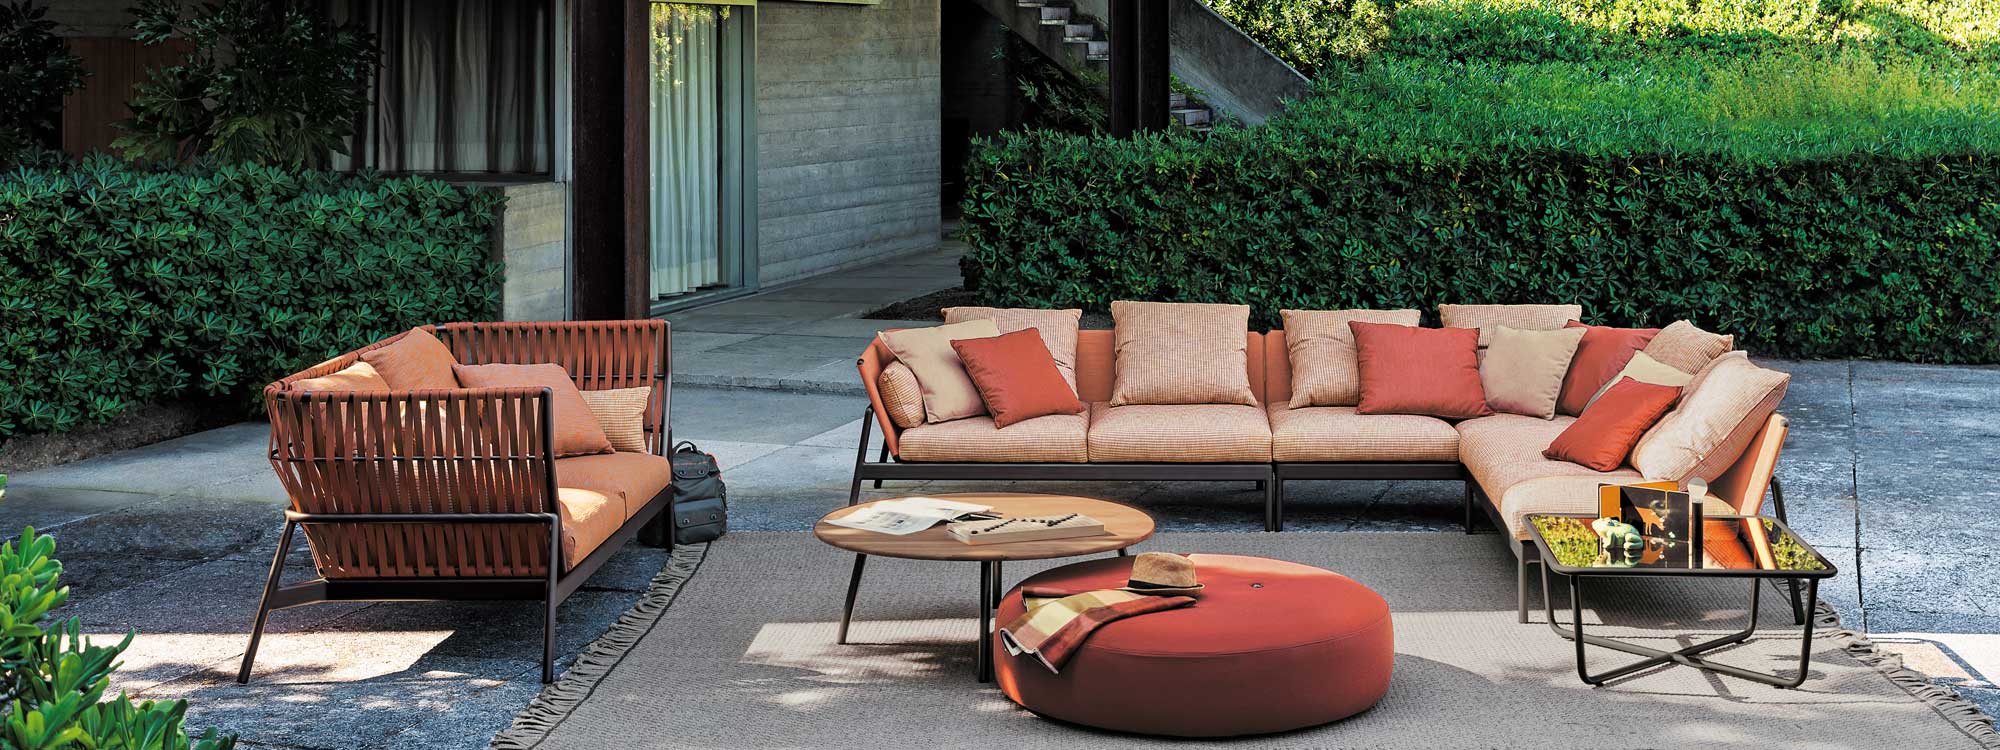 Piper garden sofas in vibrant orange on minimalist terrace